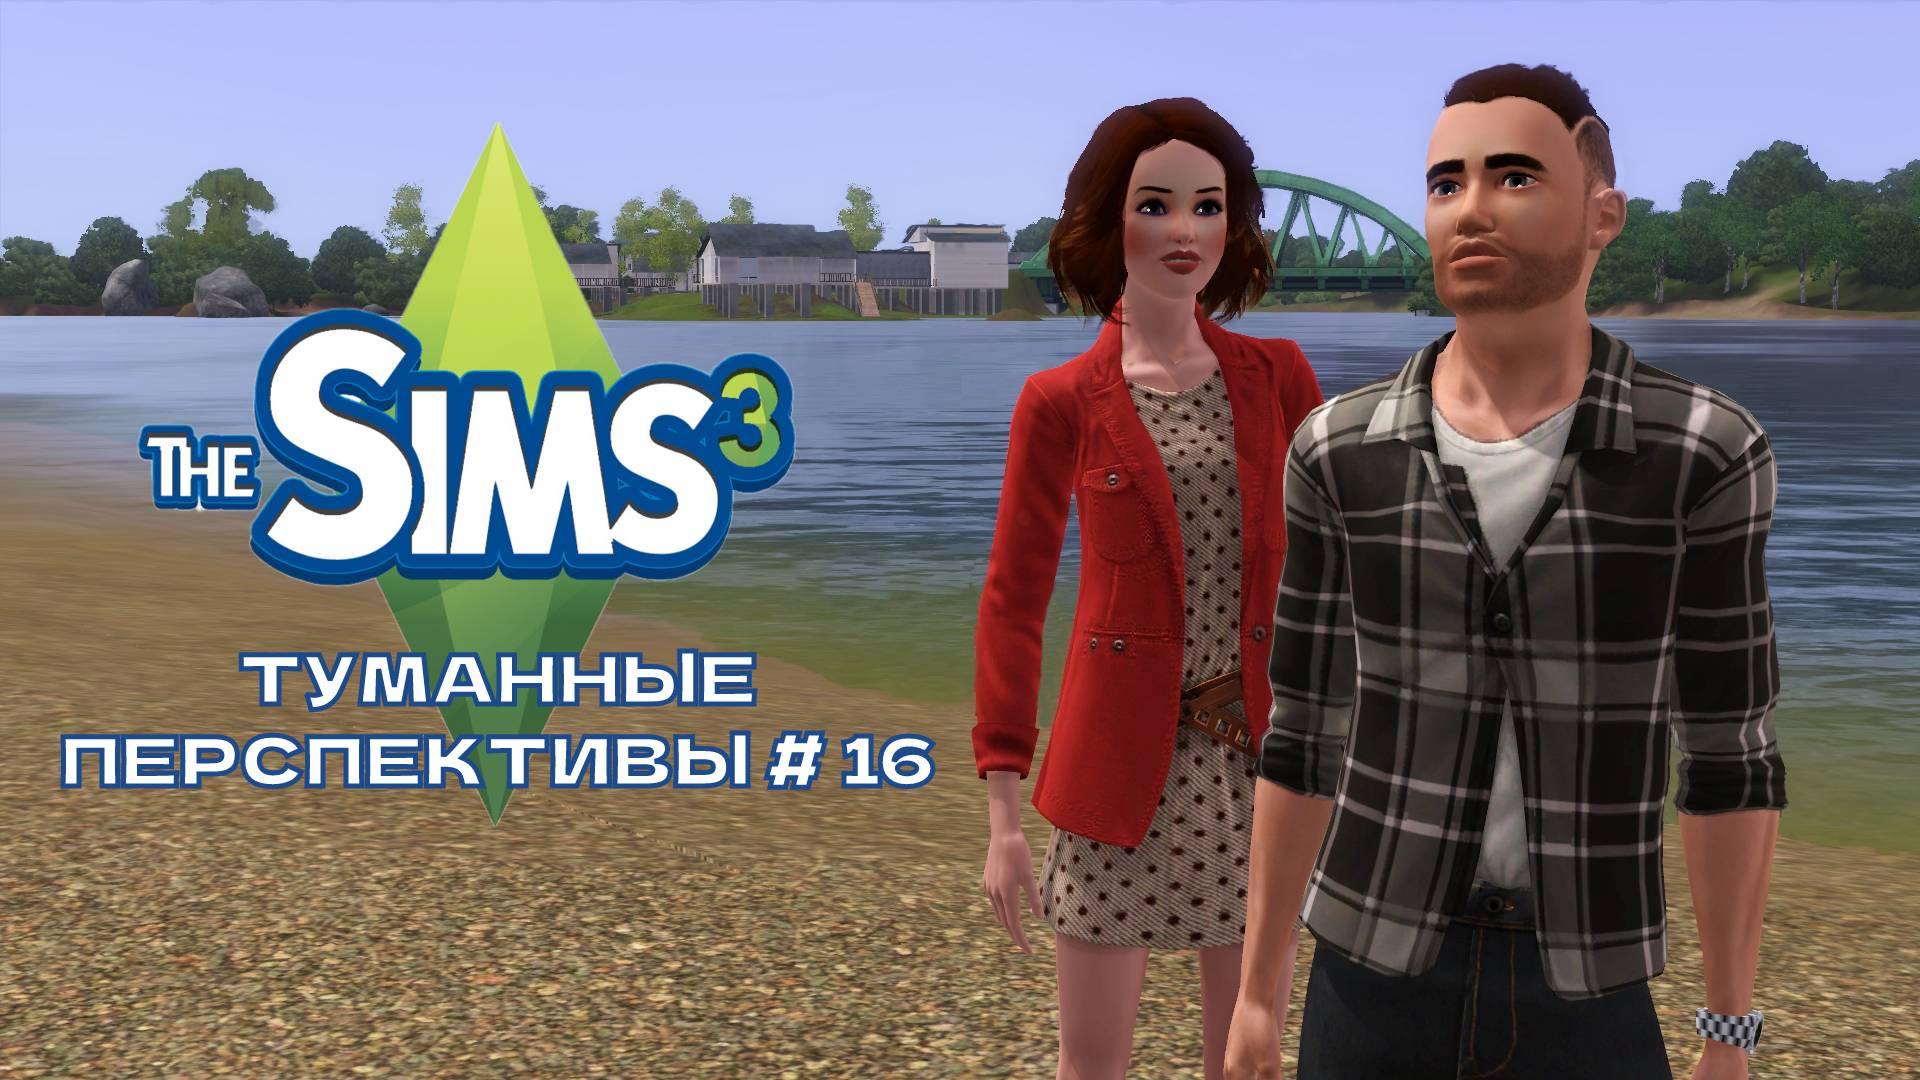 The Sims 3. Туманные перспективы #16.Собираем тыковки